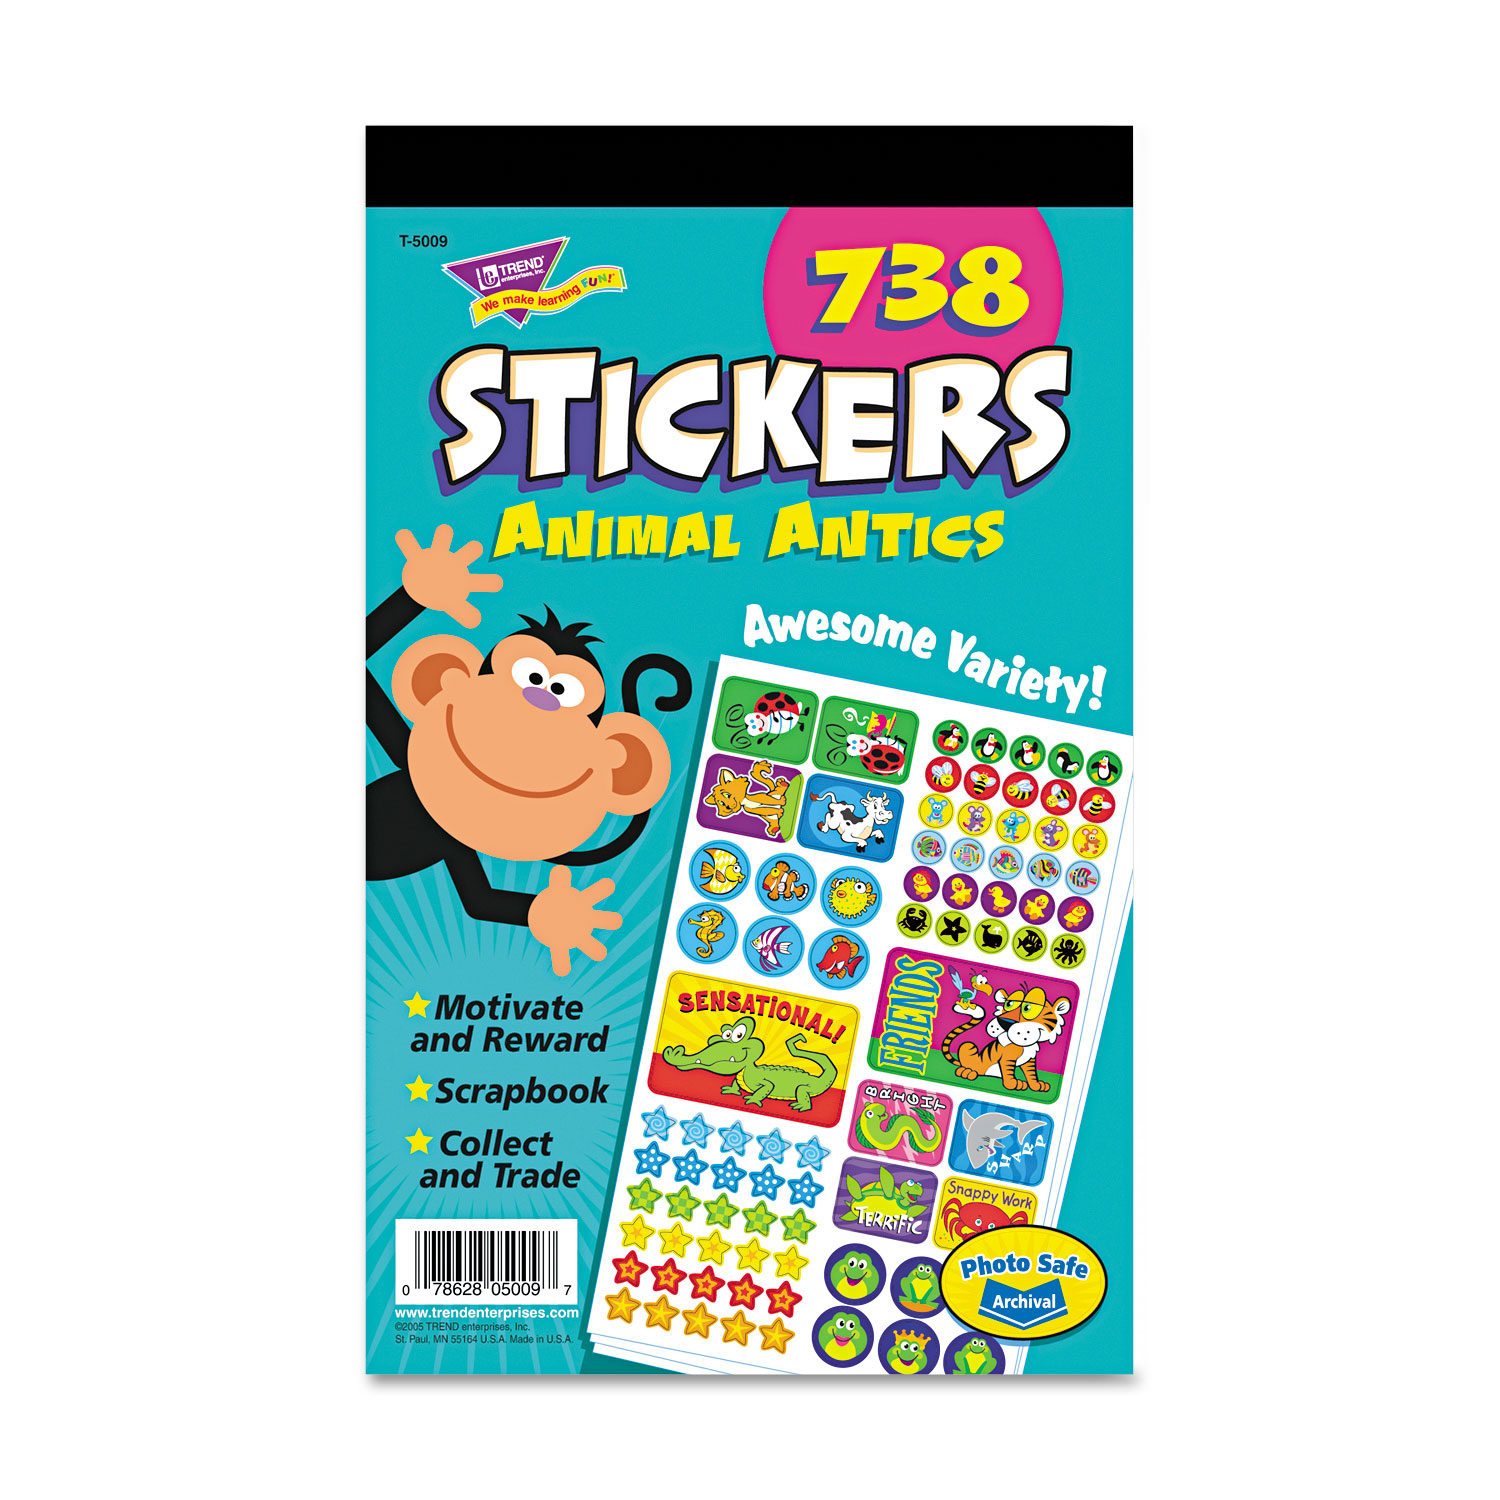 Sticker Assortment Pack, Animal Antics, 738 Stickers/Pad